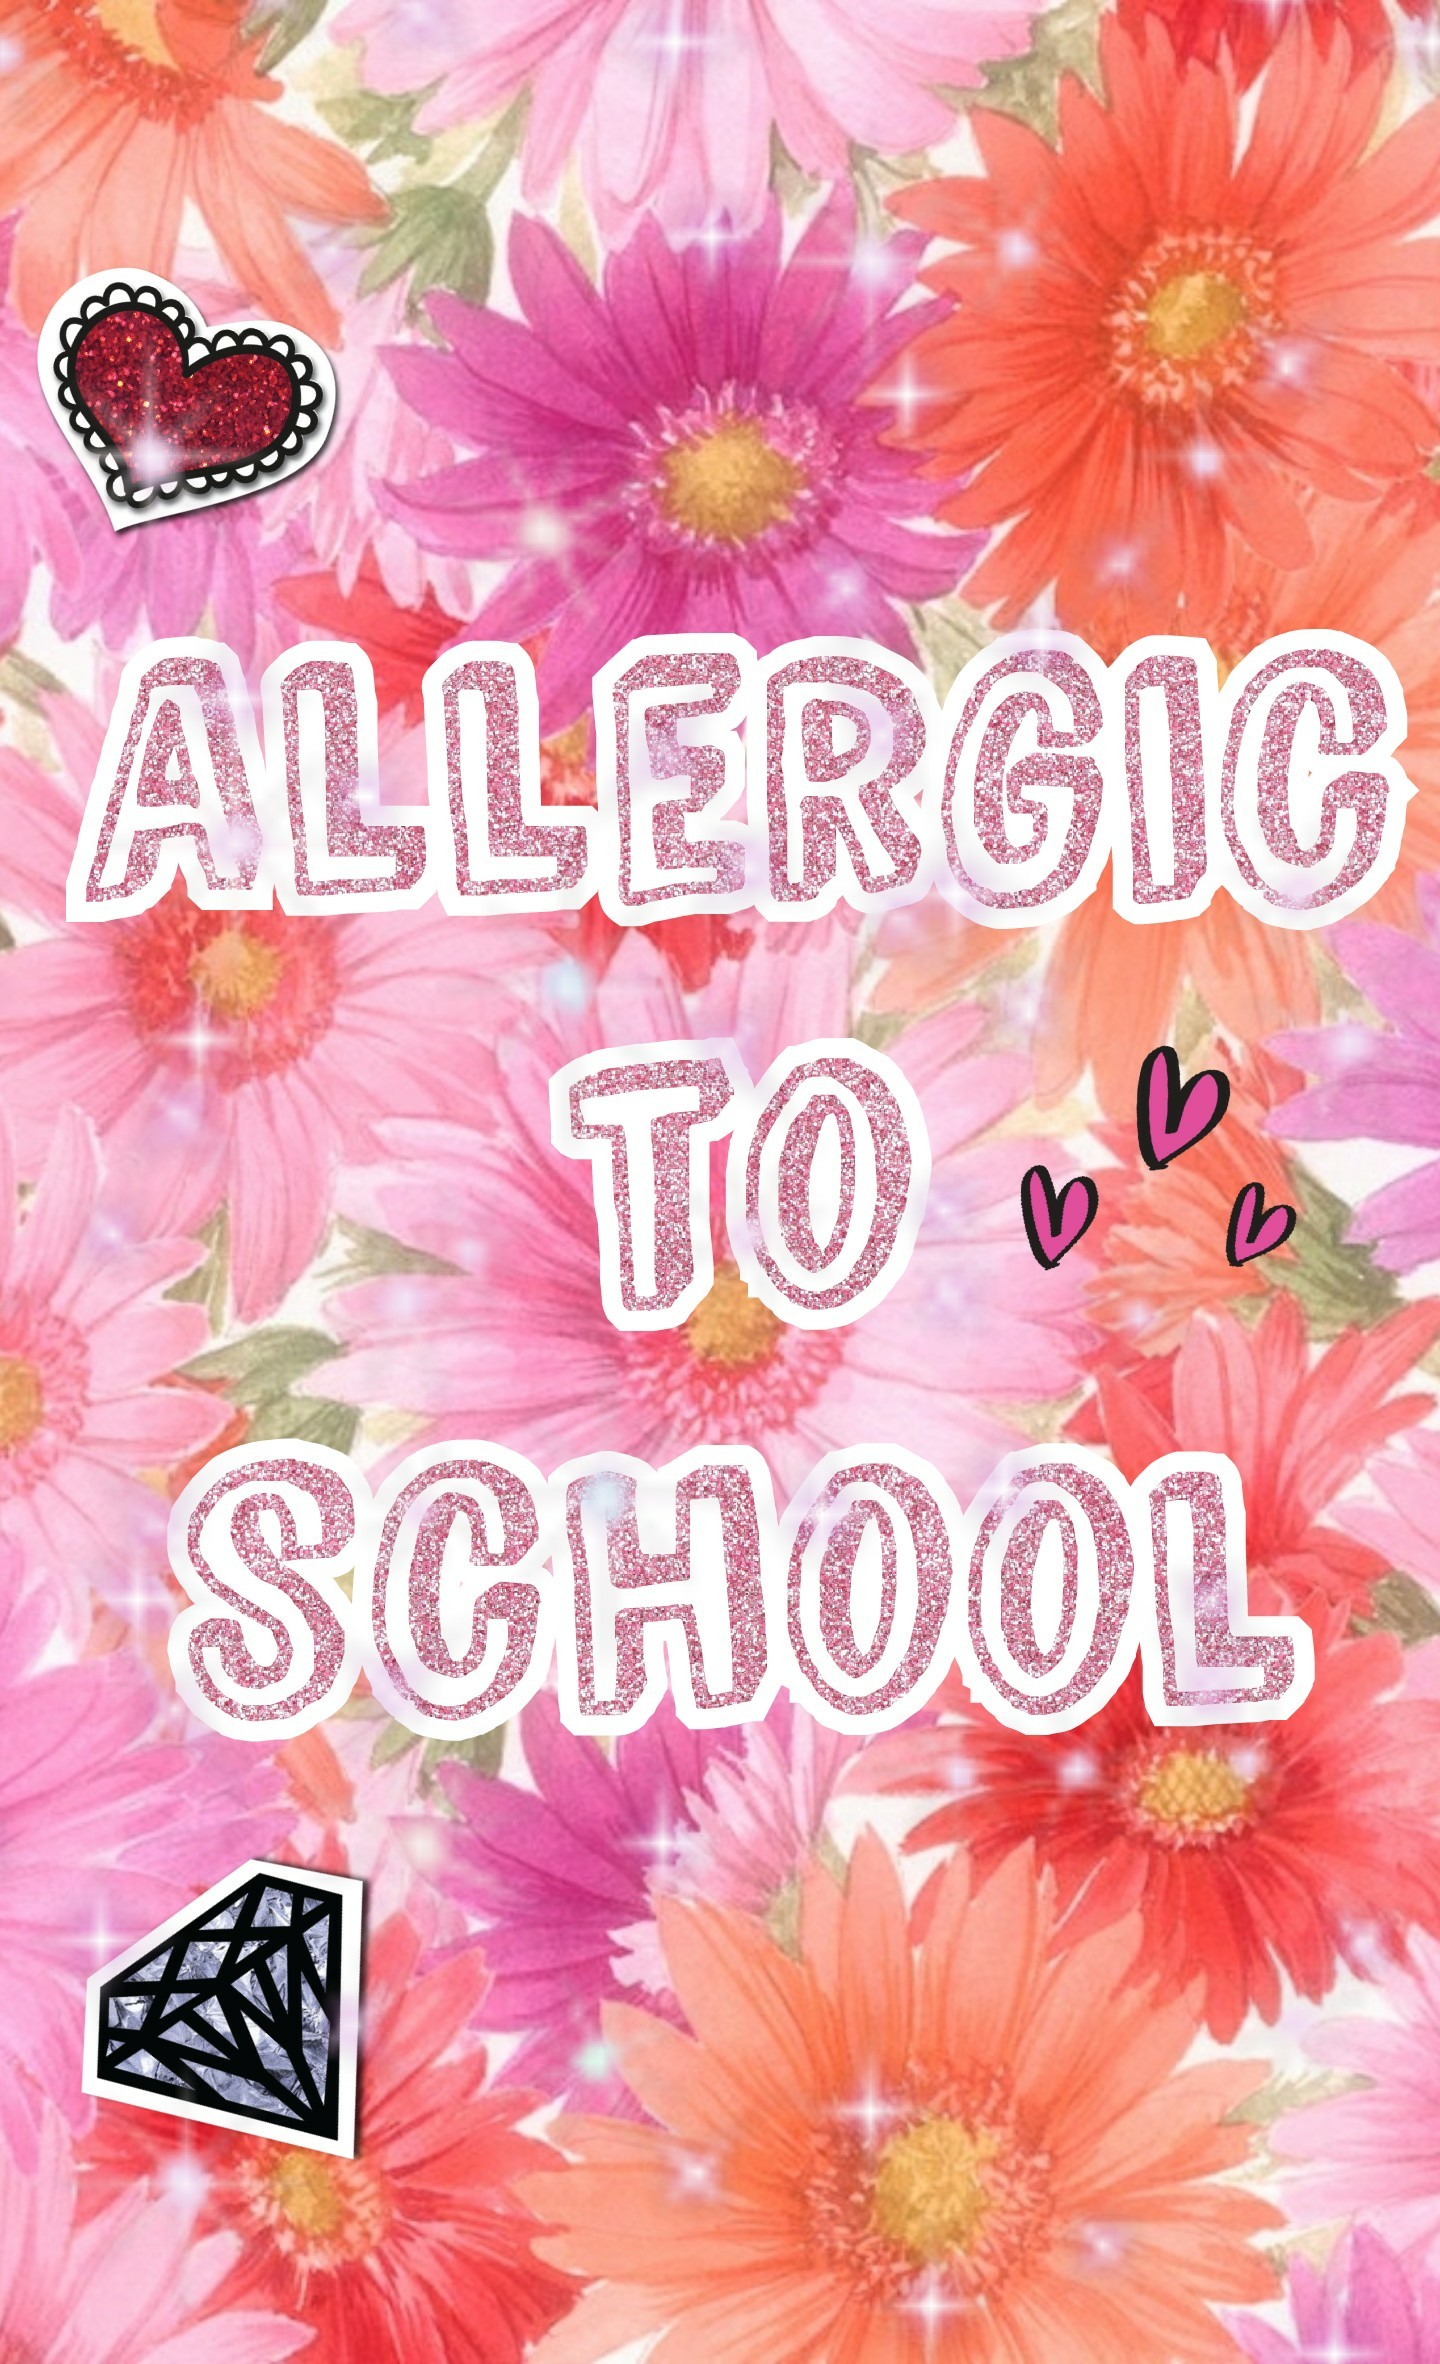 Allergic to school